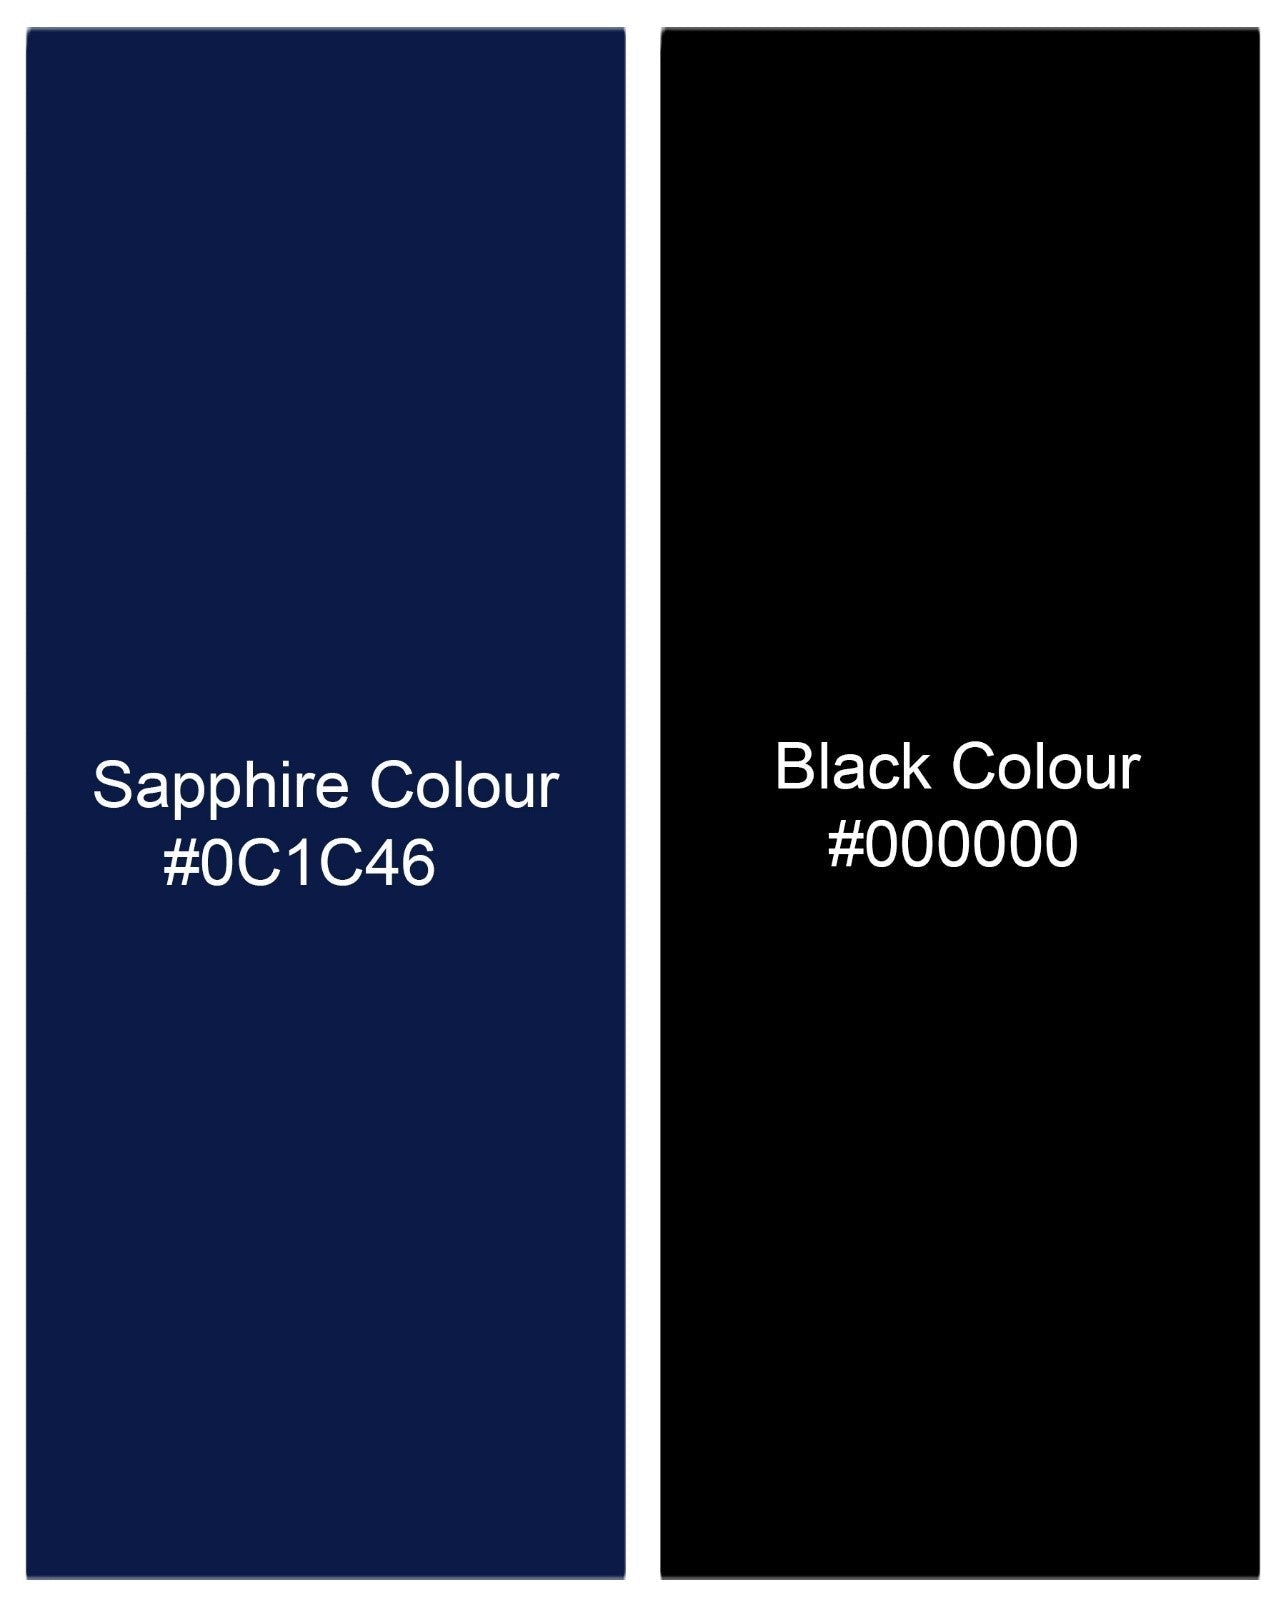 Sapphire Blue Dobby Textured Premium Giza Cotton Shirt 8015-CA-BLK-38,8015-CA-BLK-H-38,8015-CA-BLK-39,8015-CA-BLK-H-39,8015-CA-BLK-40,8015-CA-BLK-H-40,8015-CA-BLK-42,8015-CA-BLK-H-42,8015-CA-BLK-44,8015-CA-BLK-H-44,8015-CA-BLK-46,8015-CA-BLK-H-46,8015-CA-BLK-48,8015-CA-BLK-H-48,8015-CA-BLK-50,8015-CA-BLK-H-50,8015-CA-BLK-52,8015-CA-BLK-H-52